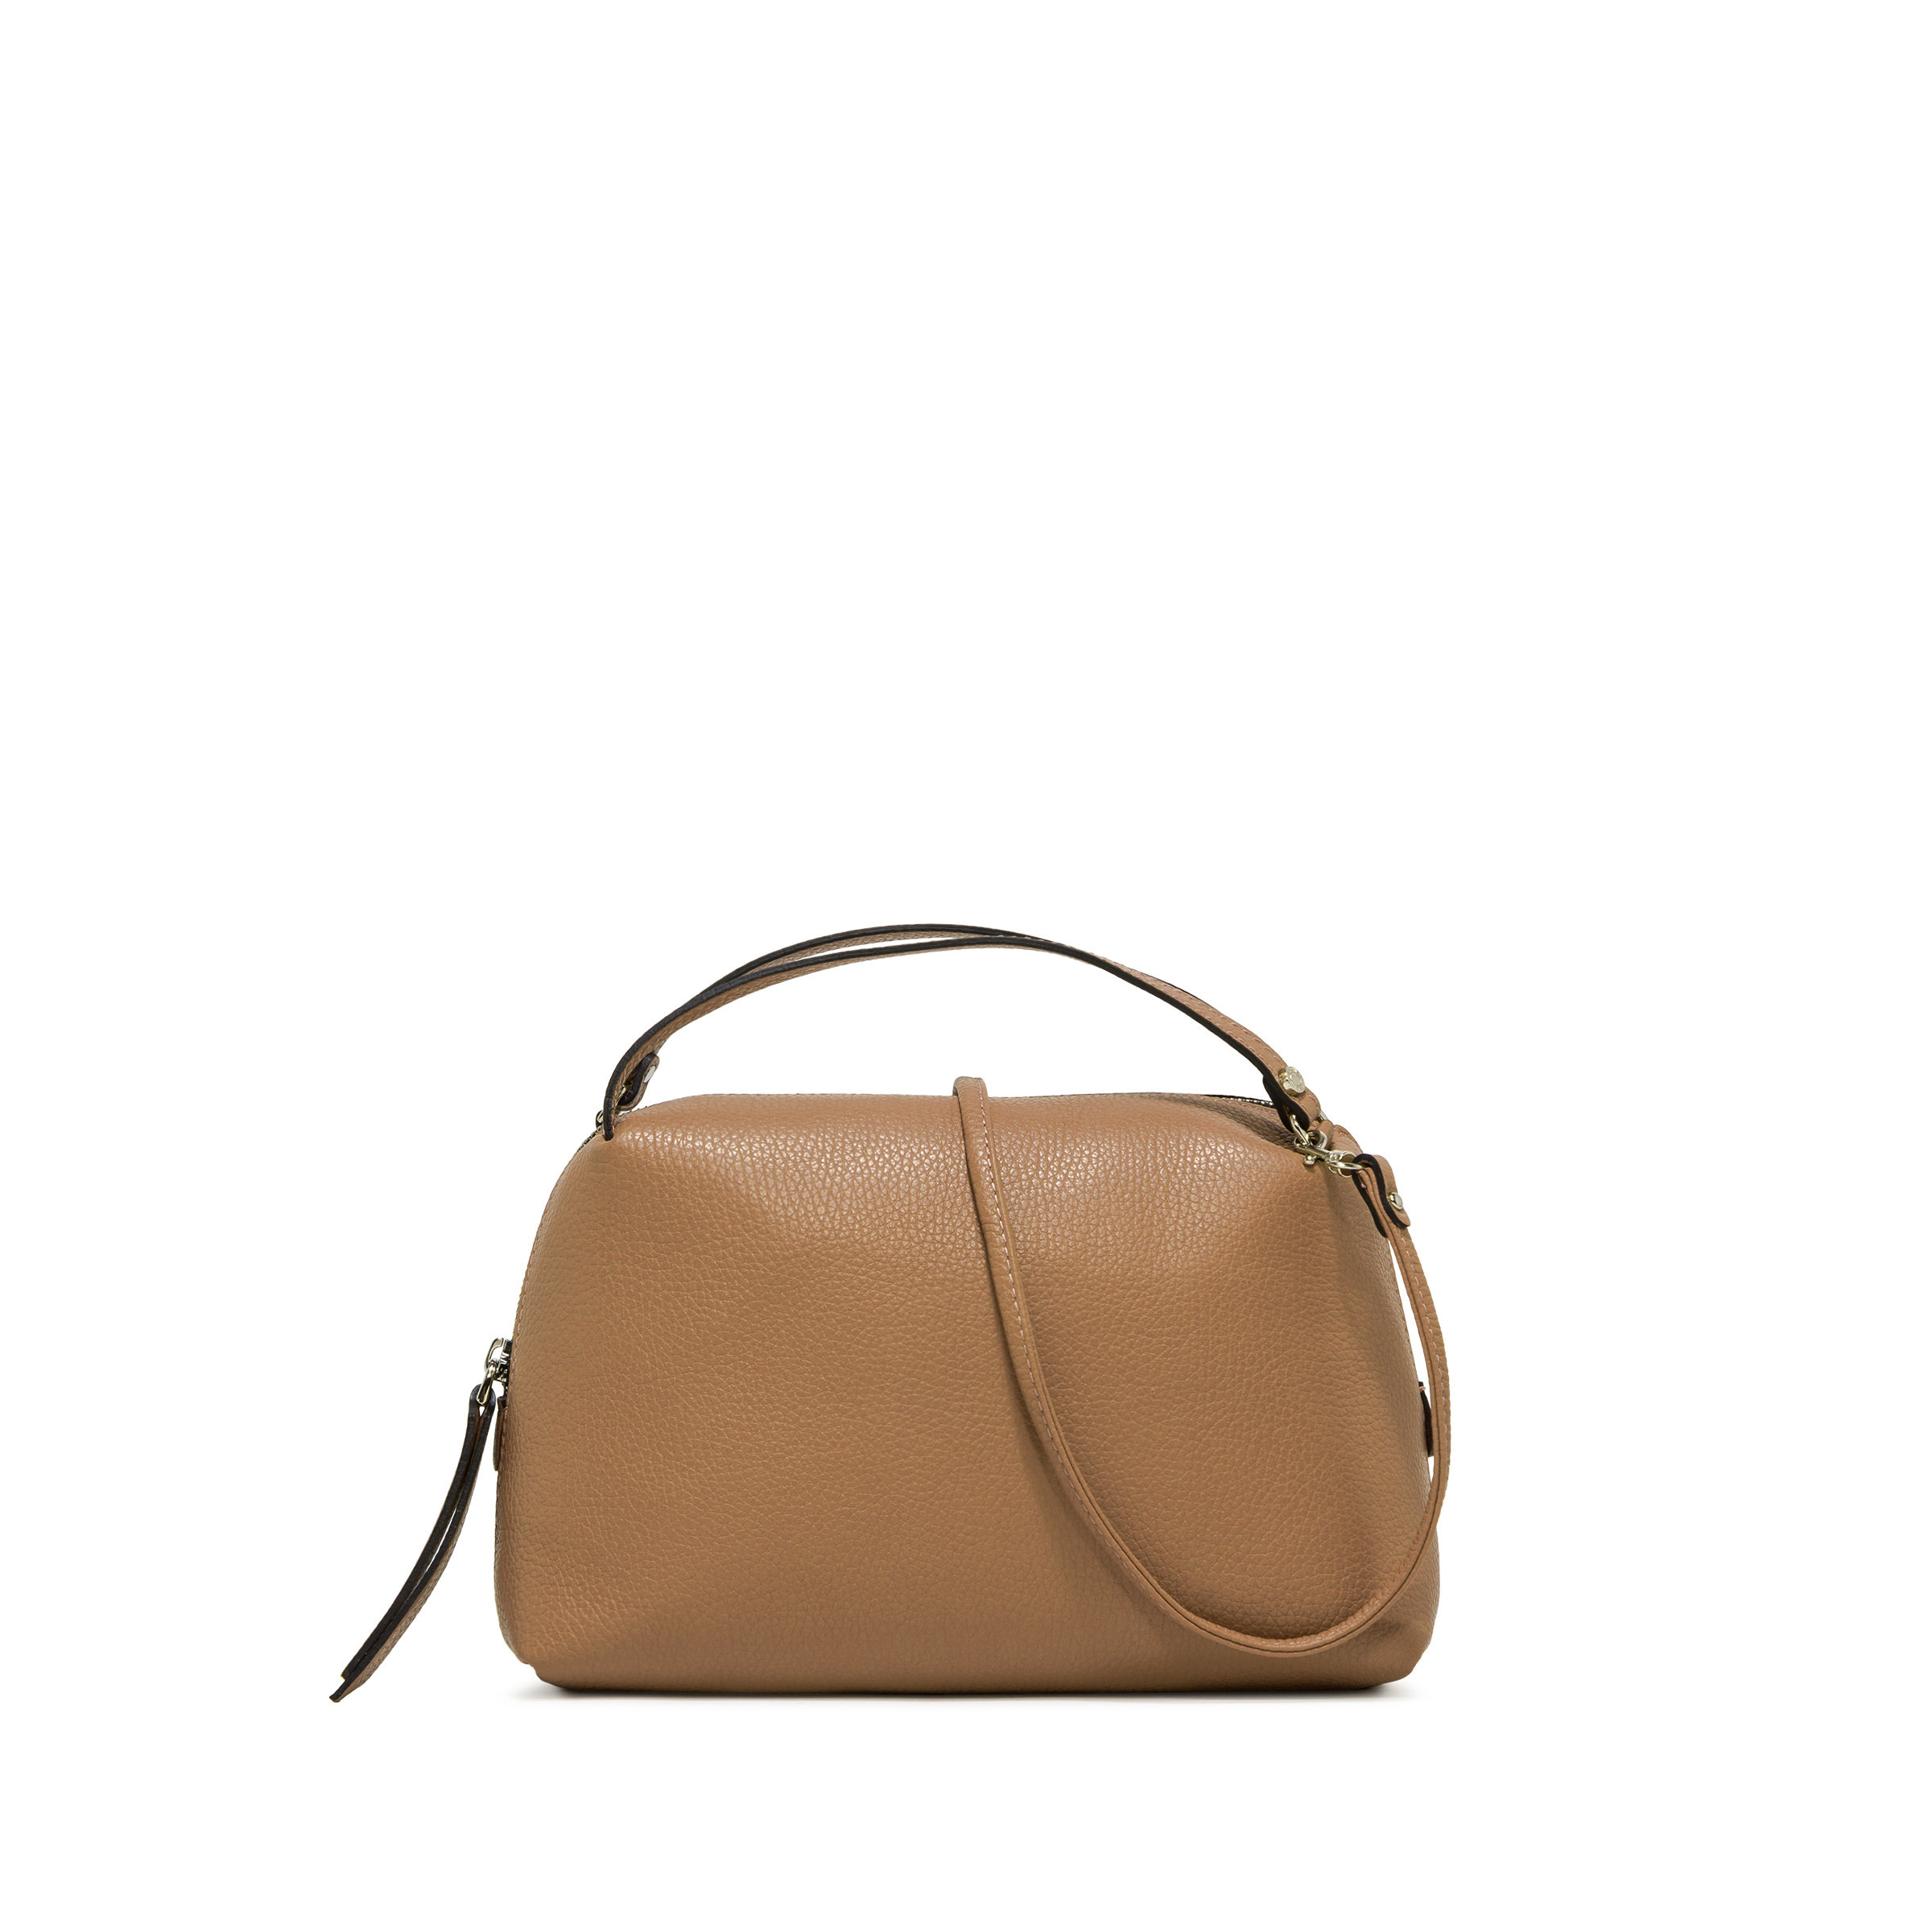 Gianni Chiarini - Alifa bag in leather, Natural, large image number 0